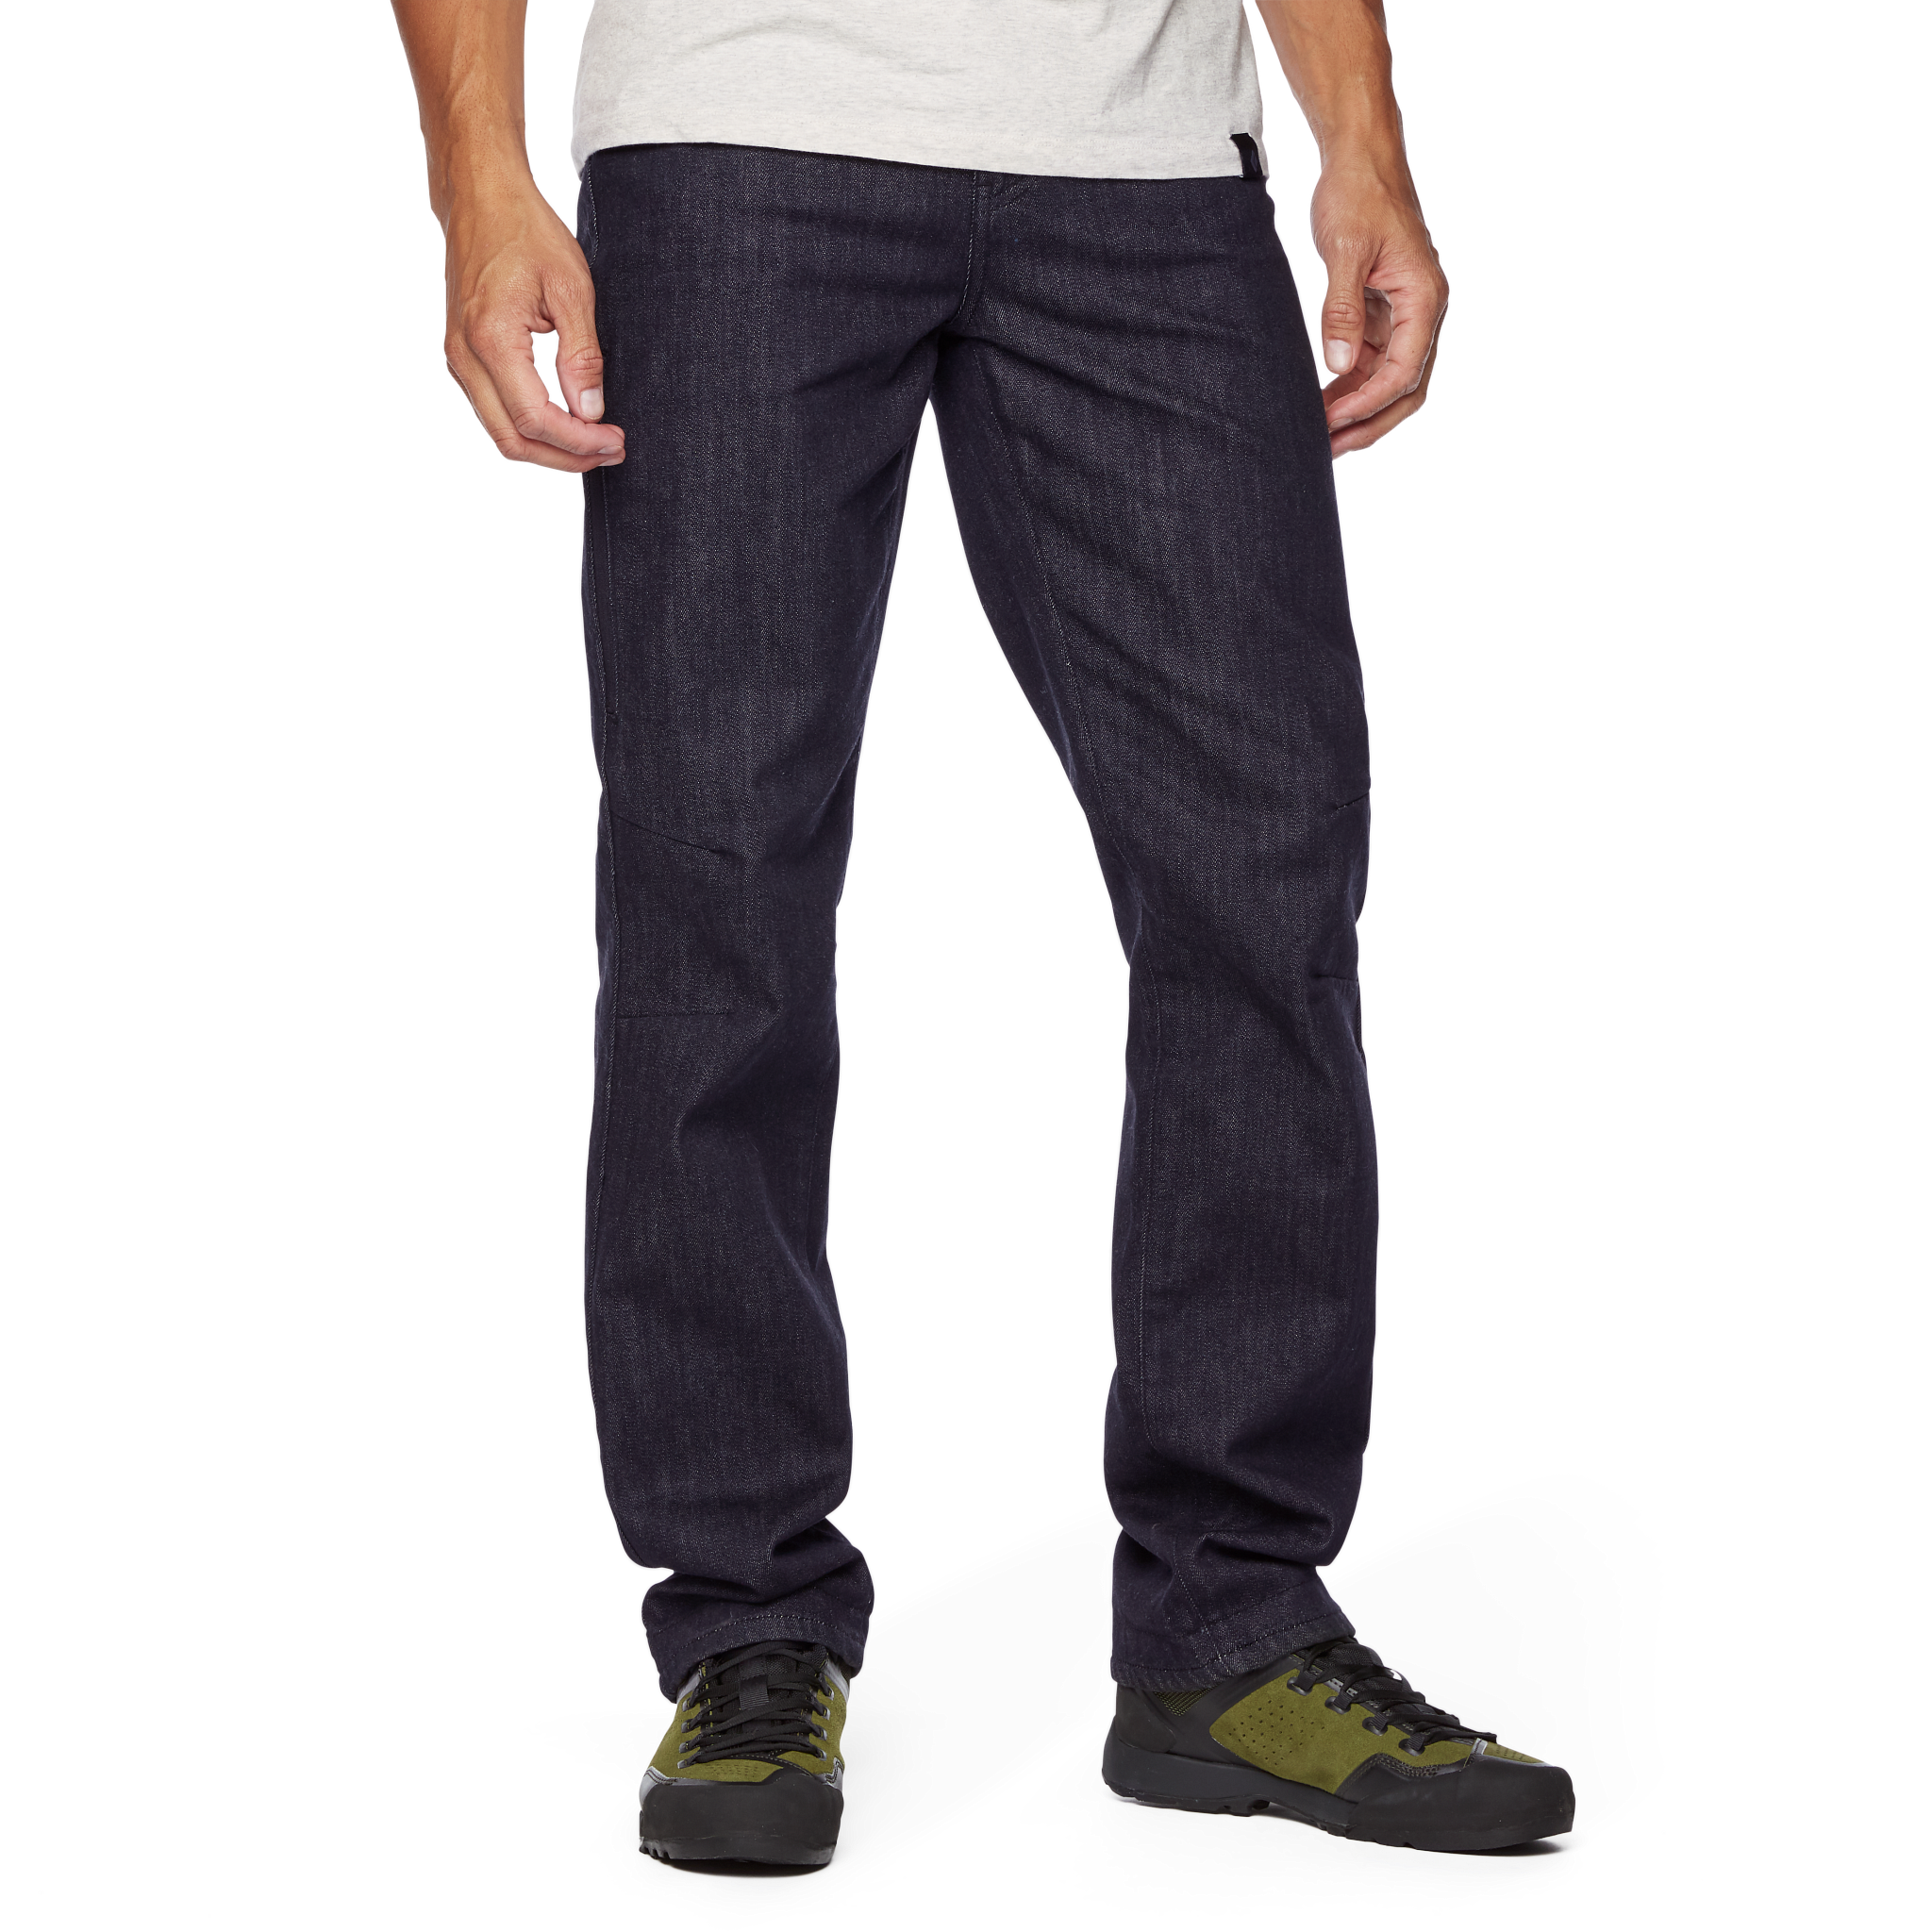 Black Diamond Equipment Men's Mission Wool Denim Pants Size 32, in Dark Grey